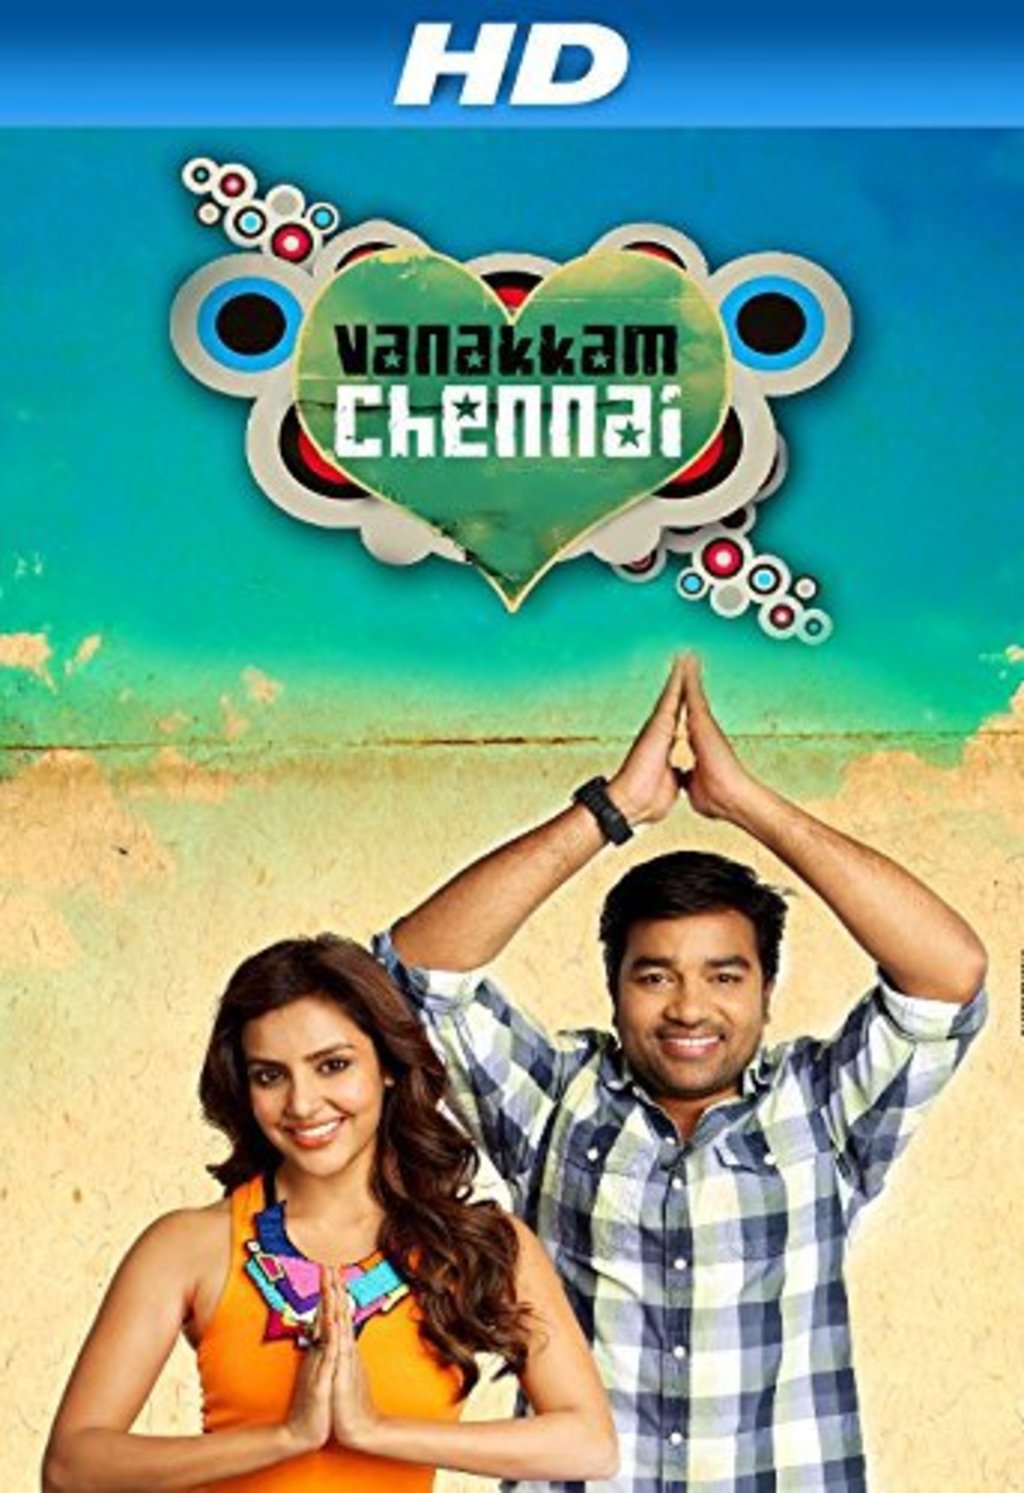 Watch Vanakkam Chennai on Netflix Today! | NetflixMovies.com